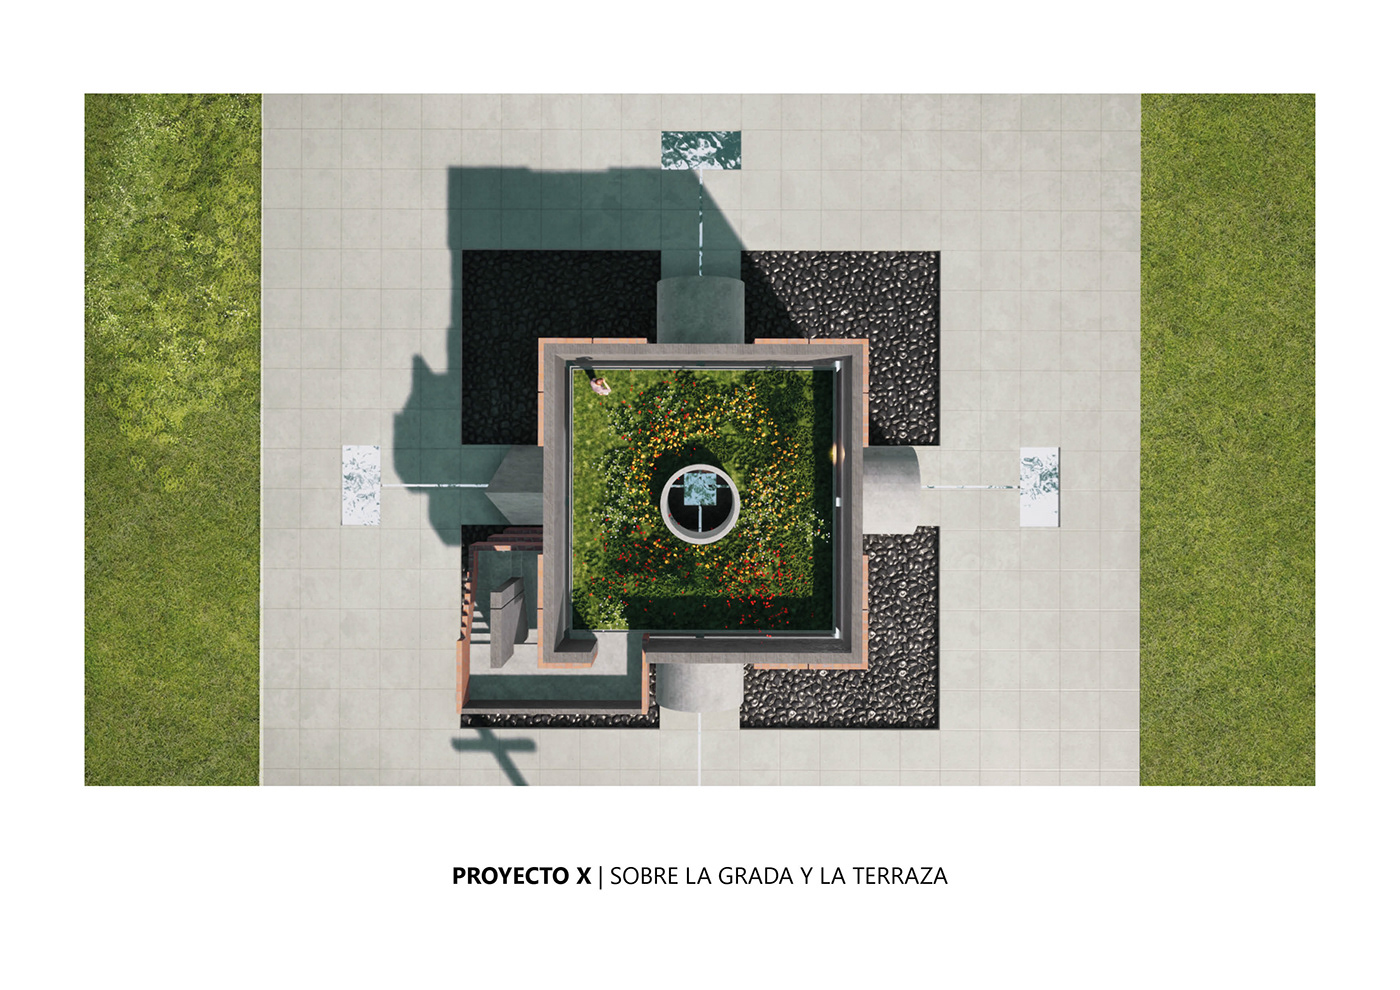 arquitectura naturales architecture Ecuador desing Provide AmazingArchitecture photoshop modern indesing